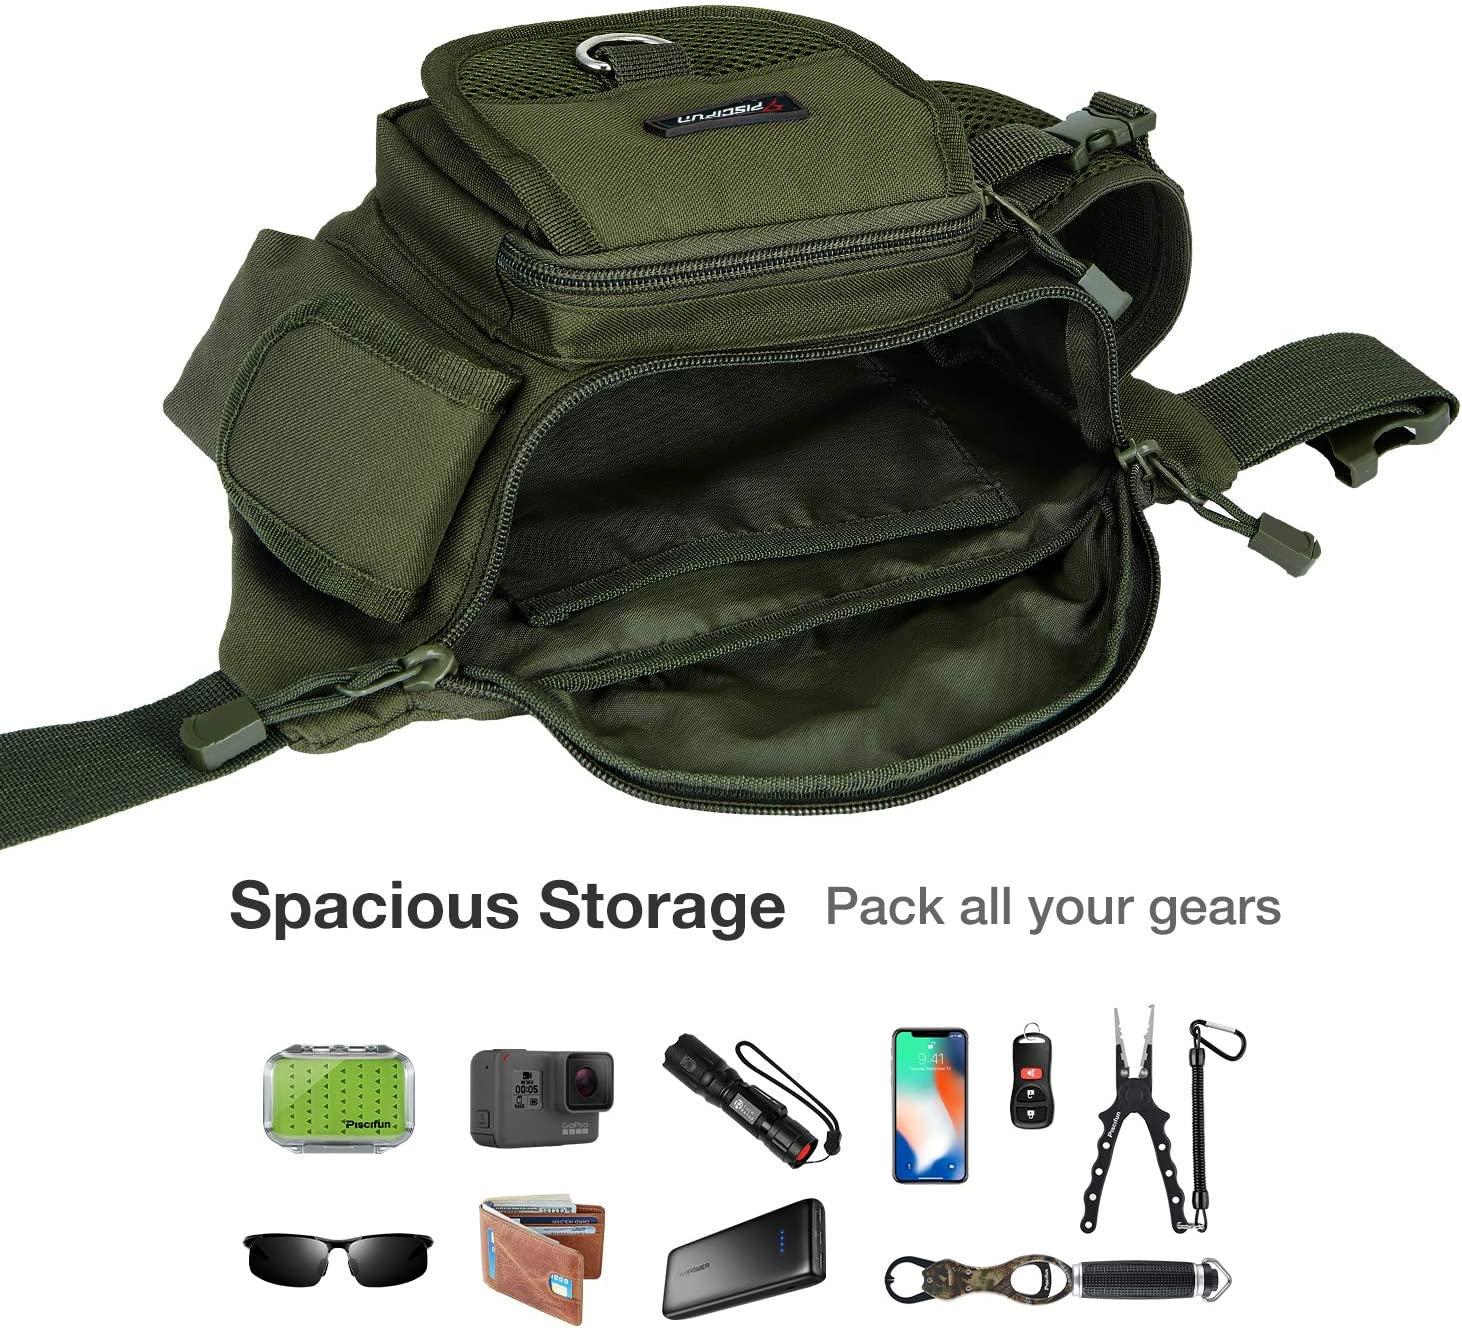 Piscifun Fishing Bag Portable Outdoor Fishing Tackle Bags Multiple